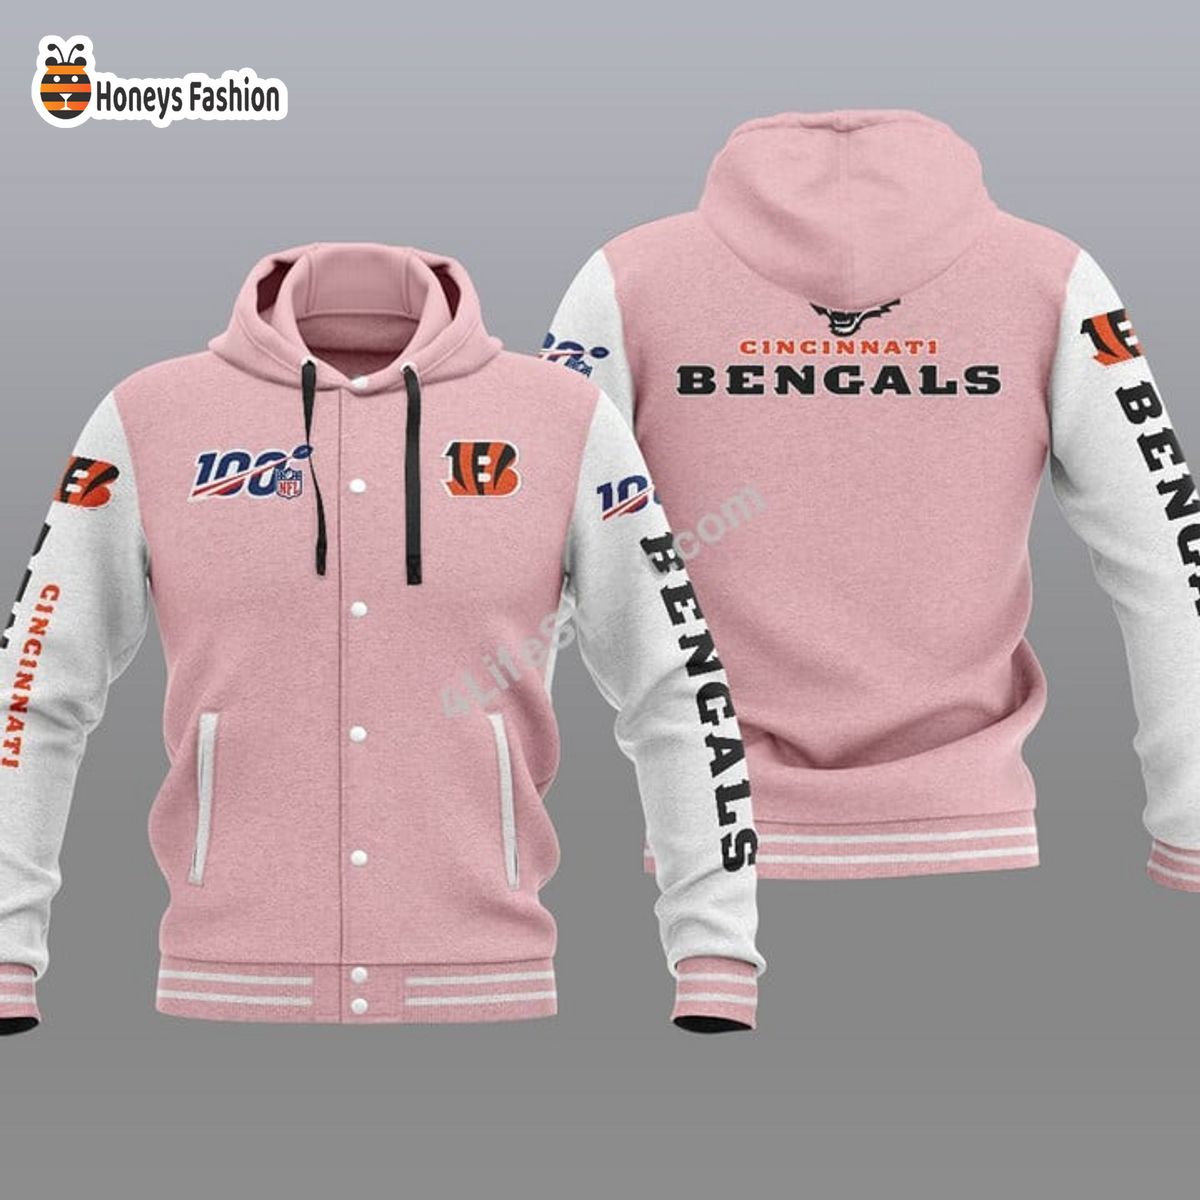 Cincinnati Bengals 100th Anniversary Season Hooded Varsity Jacket